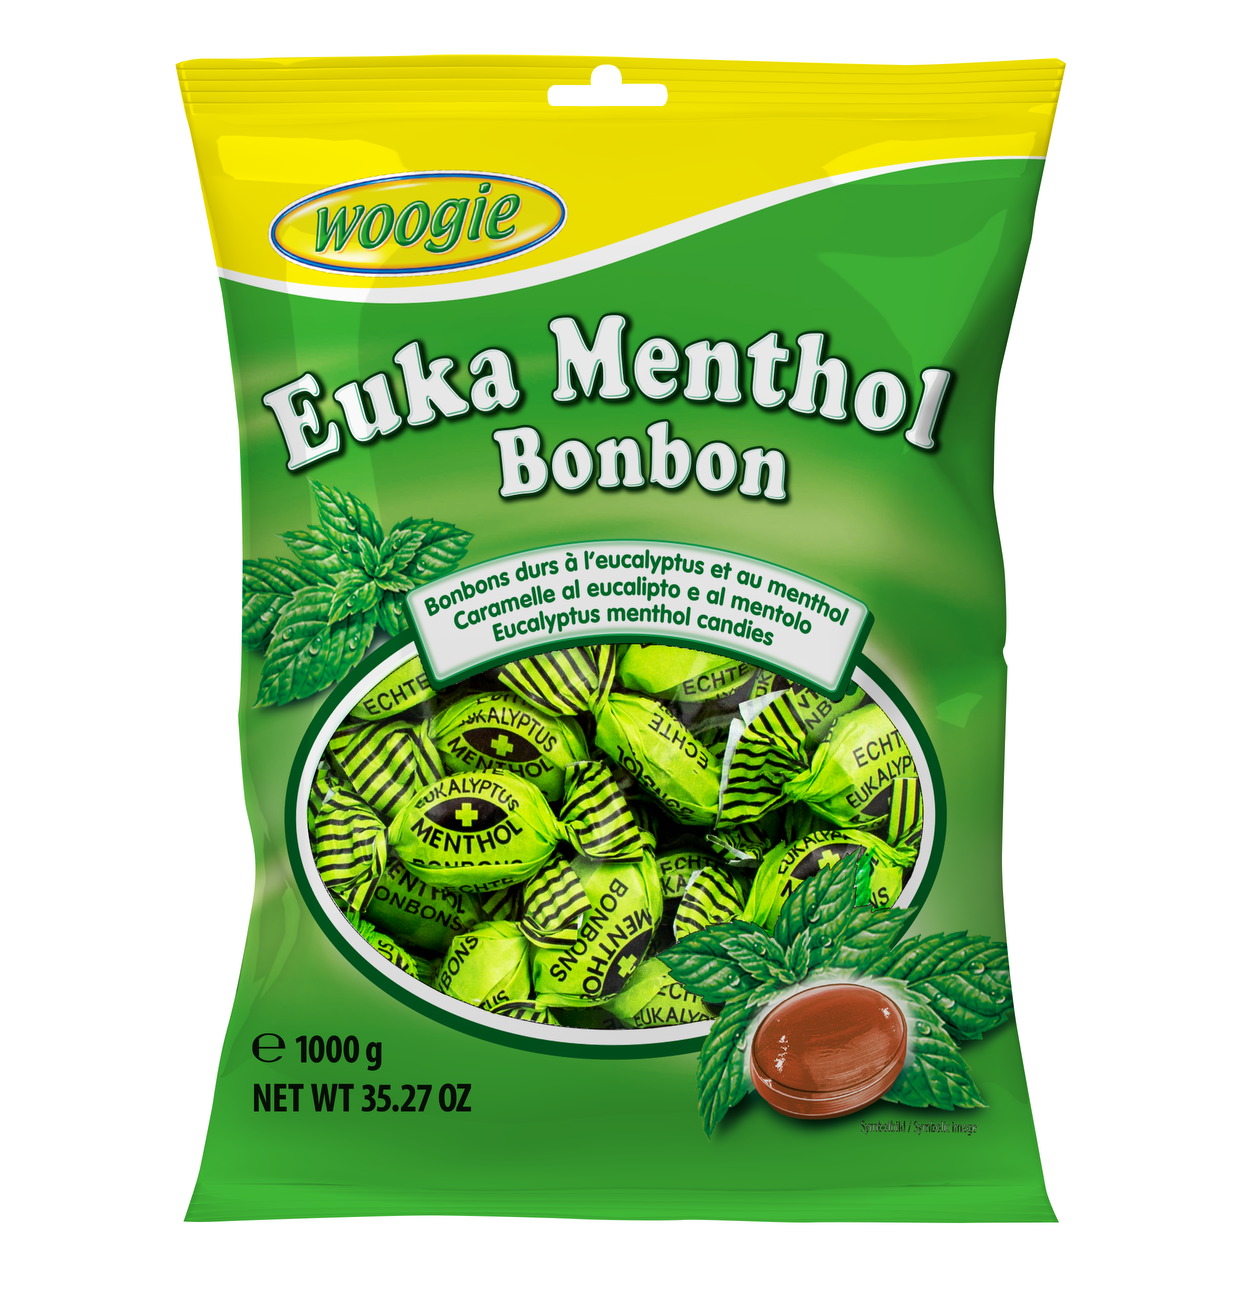 Bonbons Euka Menthol Woogie (6 x 1kg)